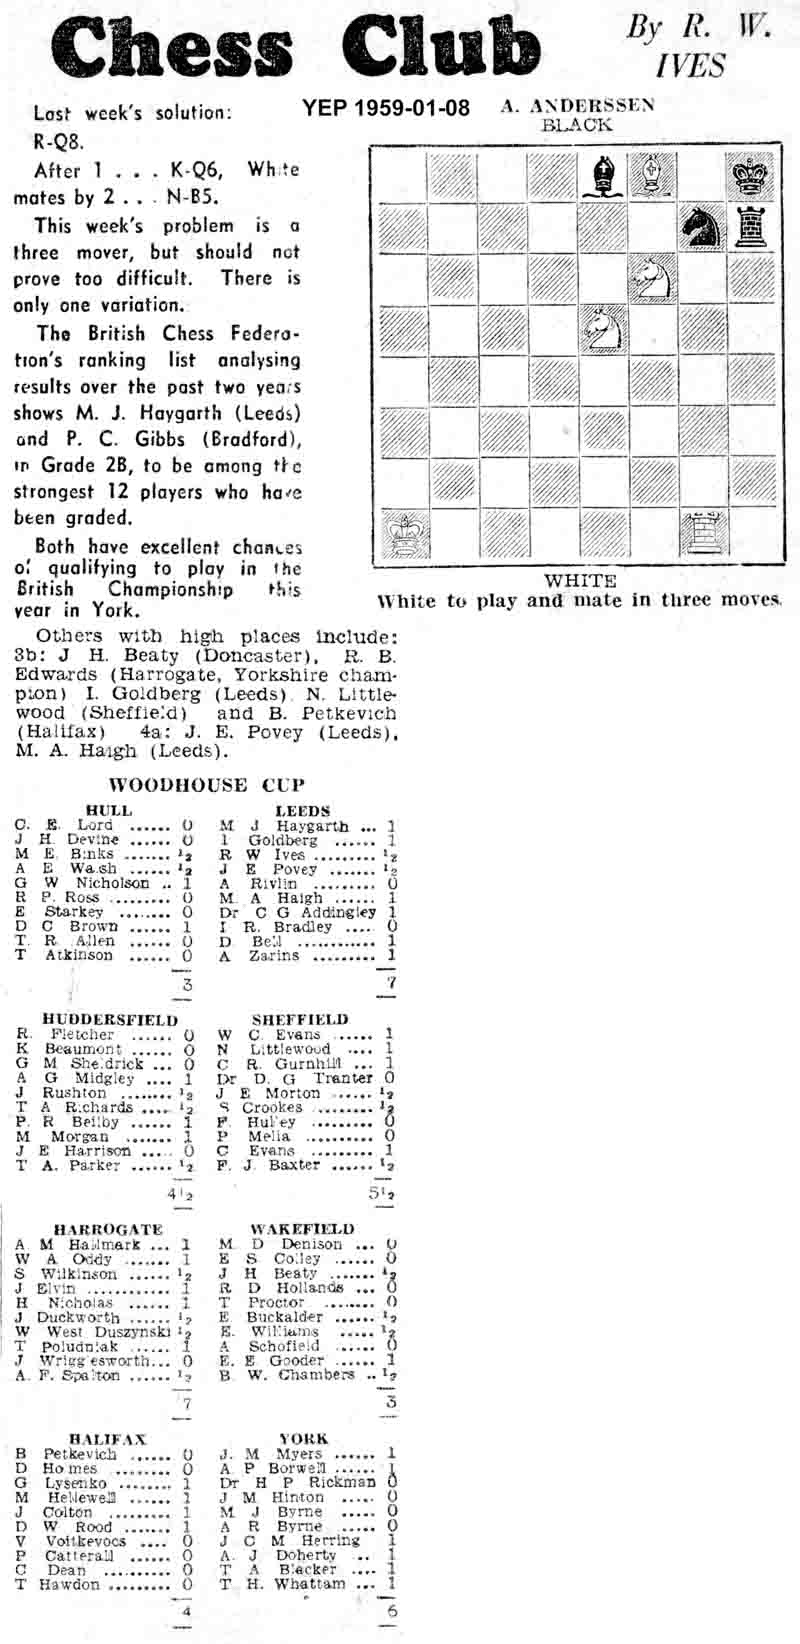 1 January 1959, Yorkshire Evening Post, chess column